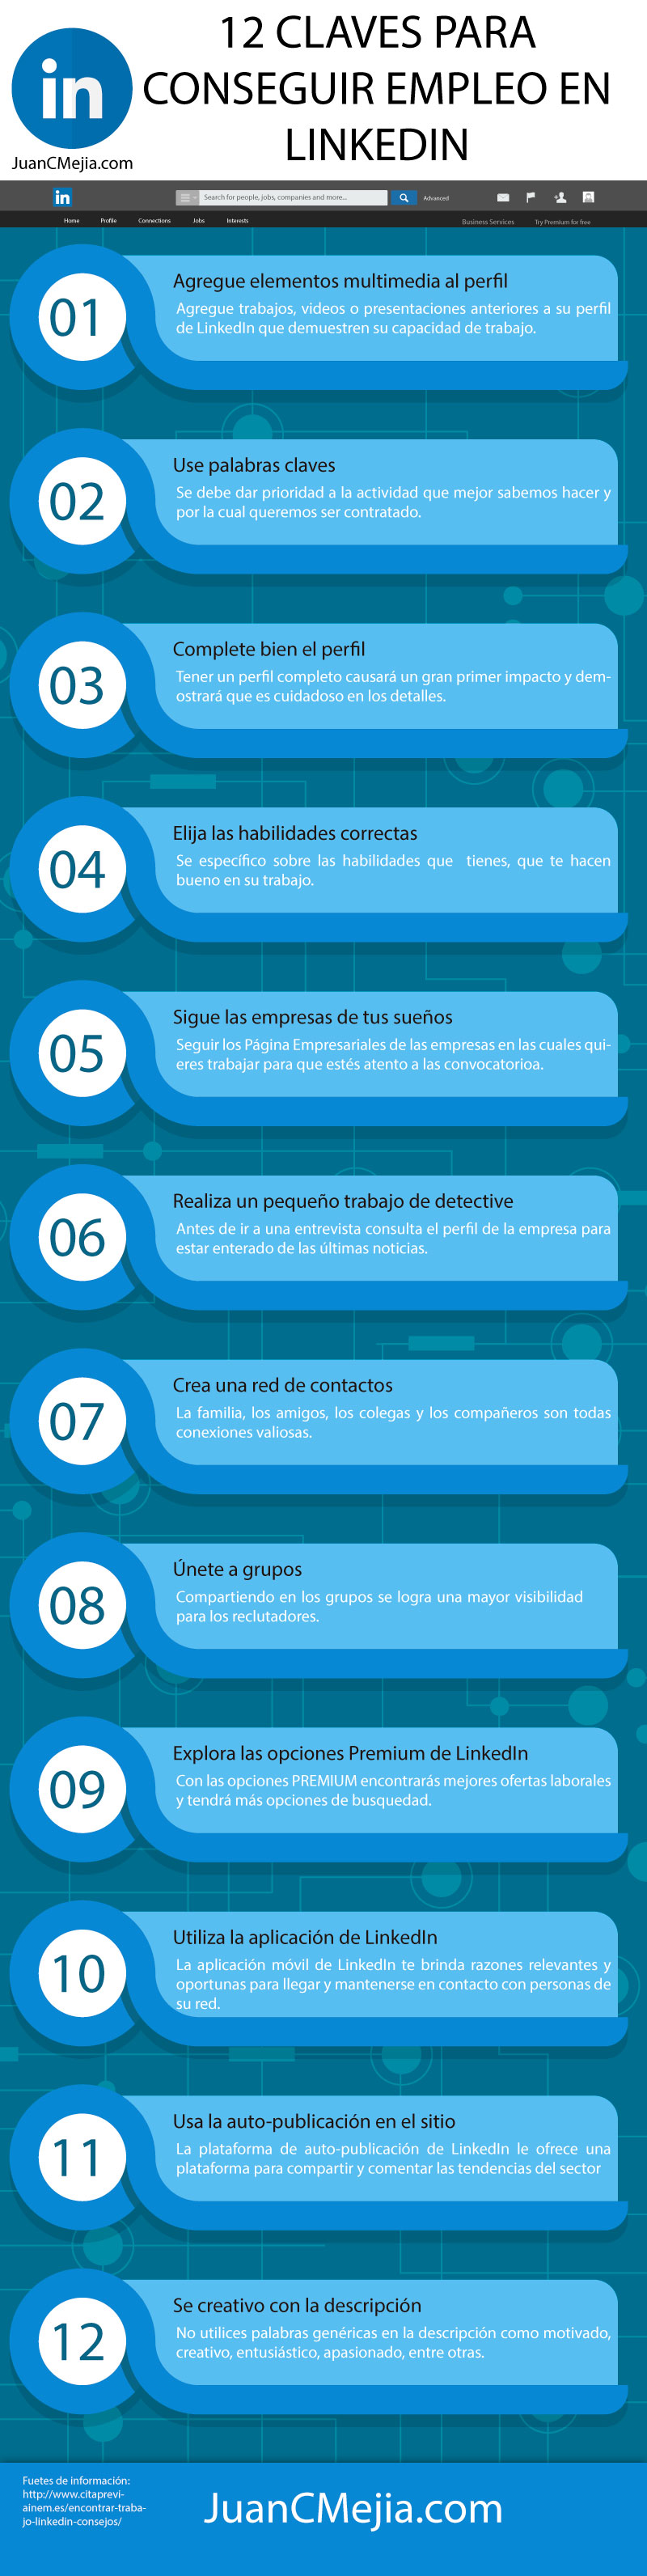 Como encontrar trabajo con LinkedIn Infografia en español